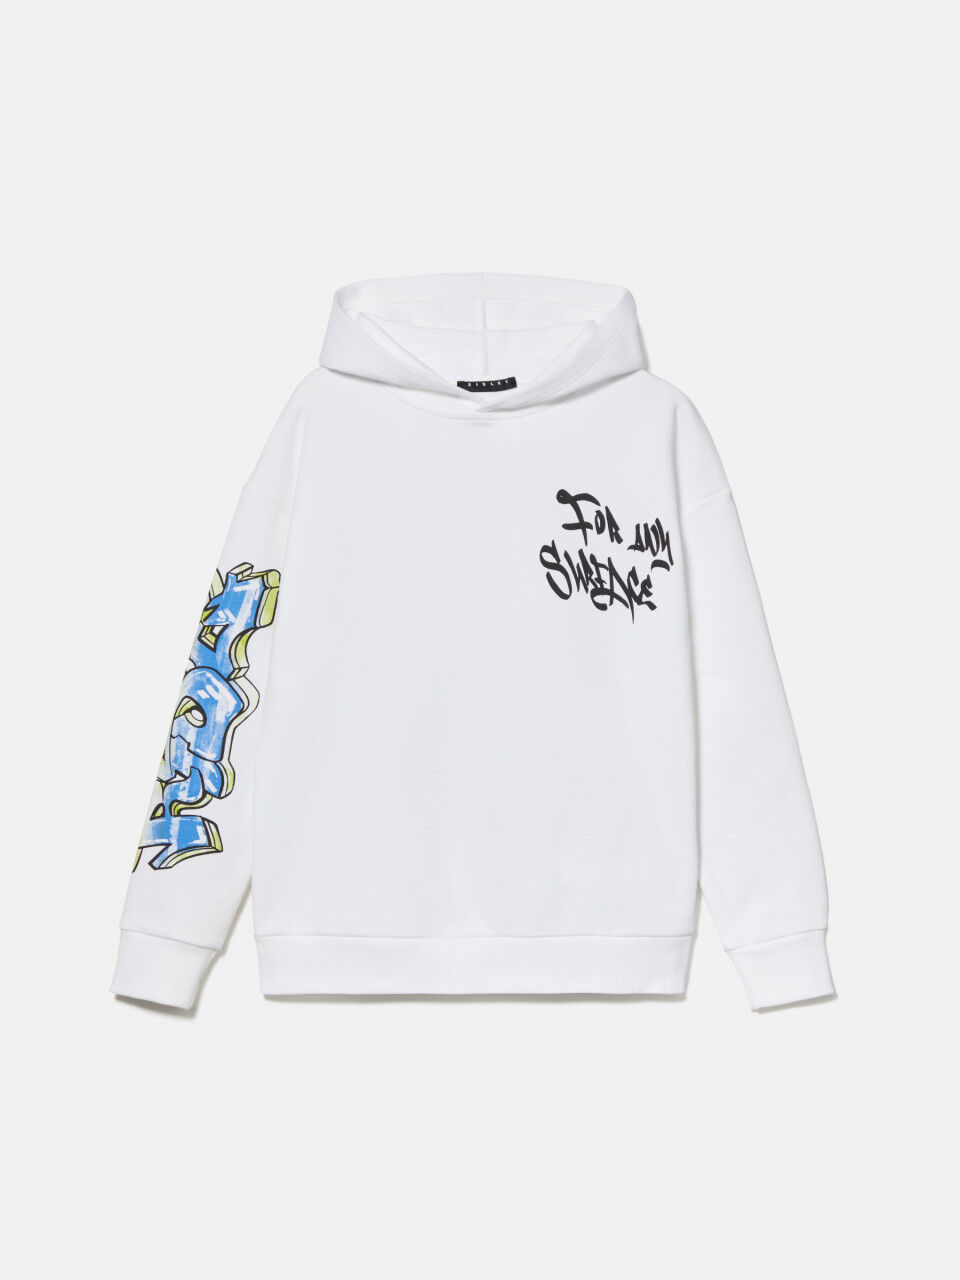 Pullover sweatshirt with graffiti print